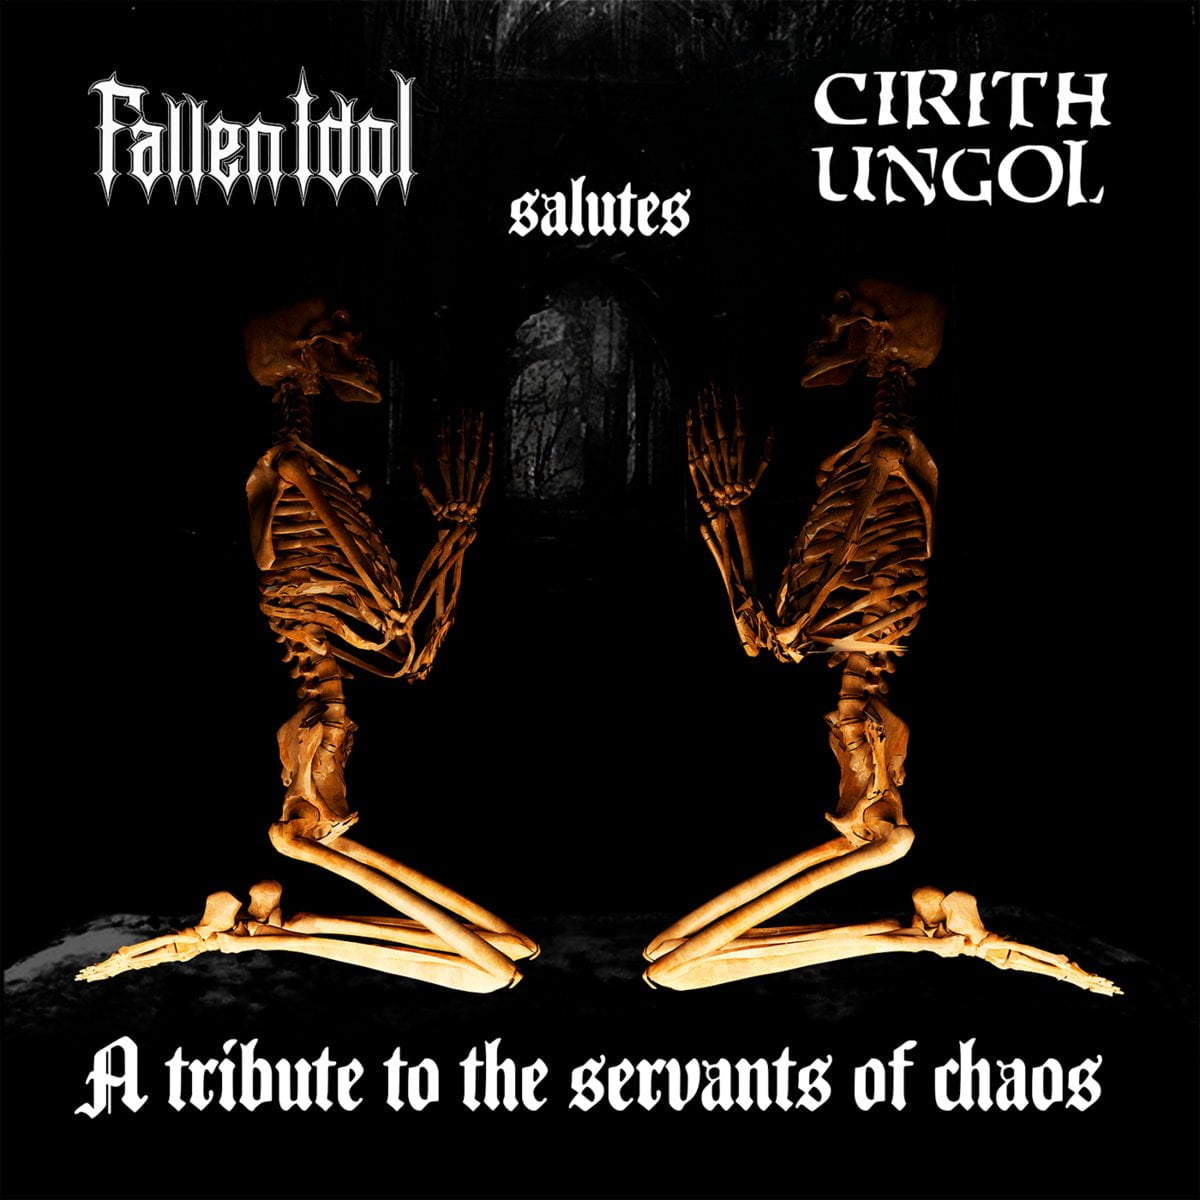 fallen idol salutes cirith ungol a tribute to the servants of chaos Fallen Idols | Cirith Ungol Online